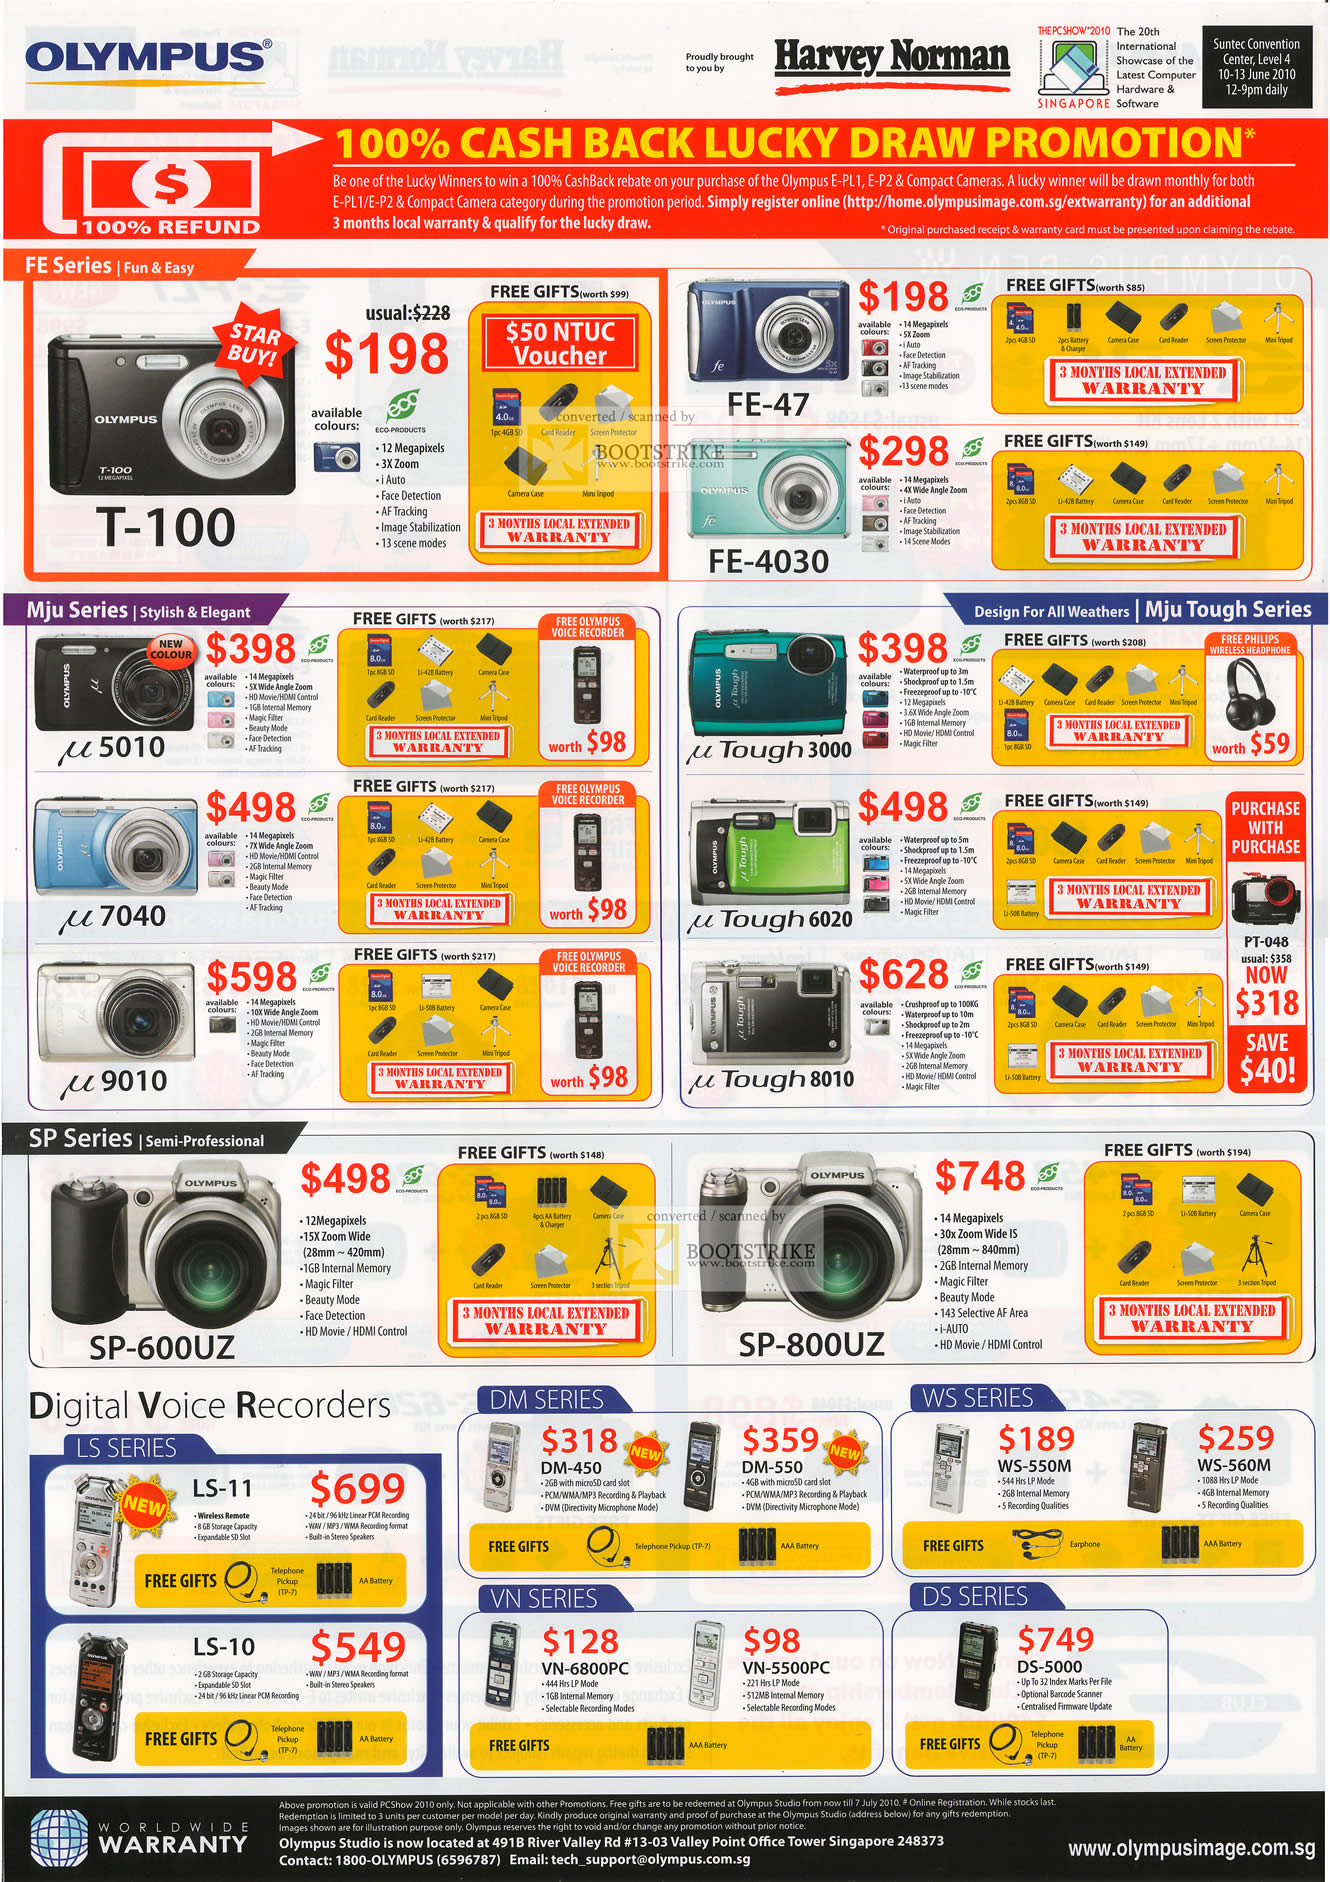 PC Show 2010 price list image brochure of Olympus Digital Cameras T100 FE 47 FE 4030 Mju U5010 UTough 3000 U7040 6020 U9010 8010 SP 600UZ 800UZ Voice Recorders